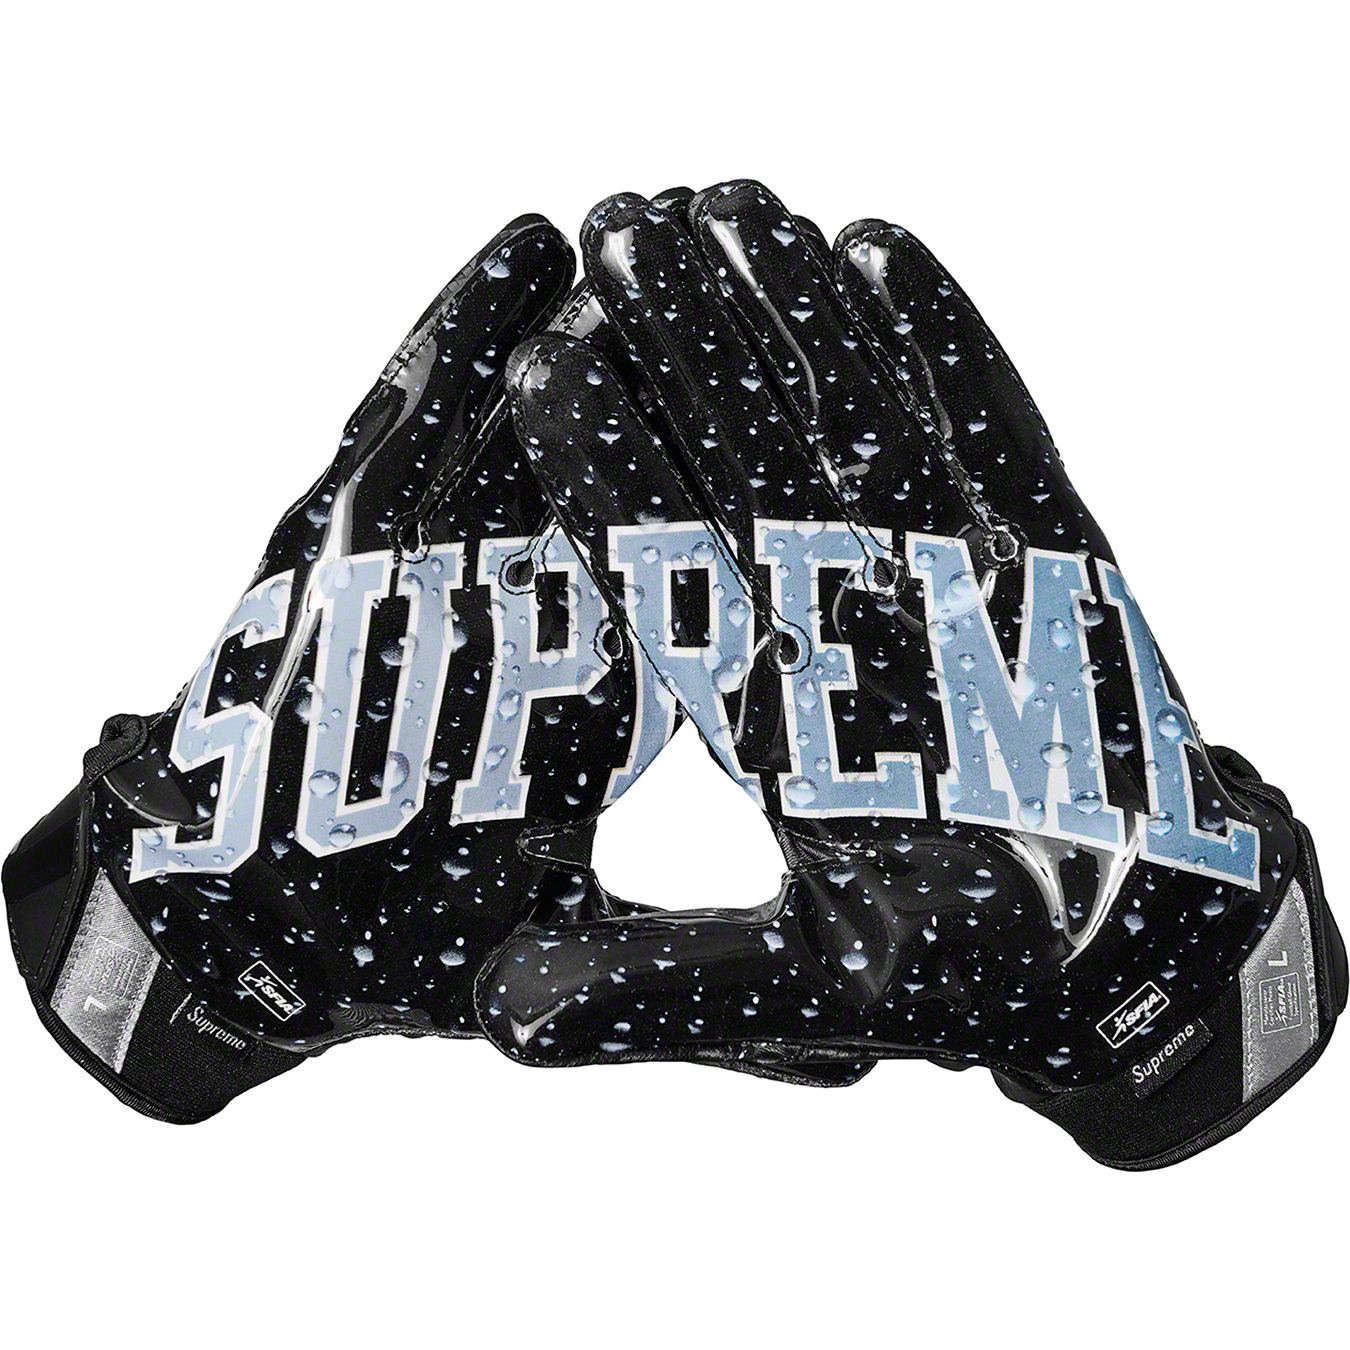 Supreme+Nike+Vapor+Jet+4.0+Football+Gloves+Red+Black+Hype+Size+